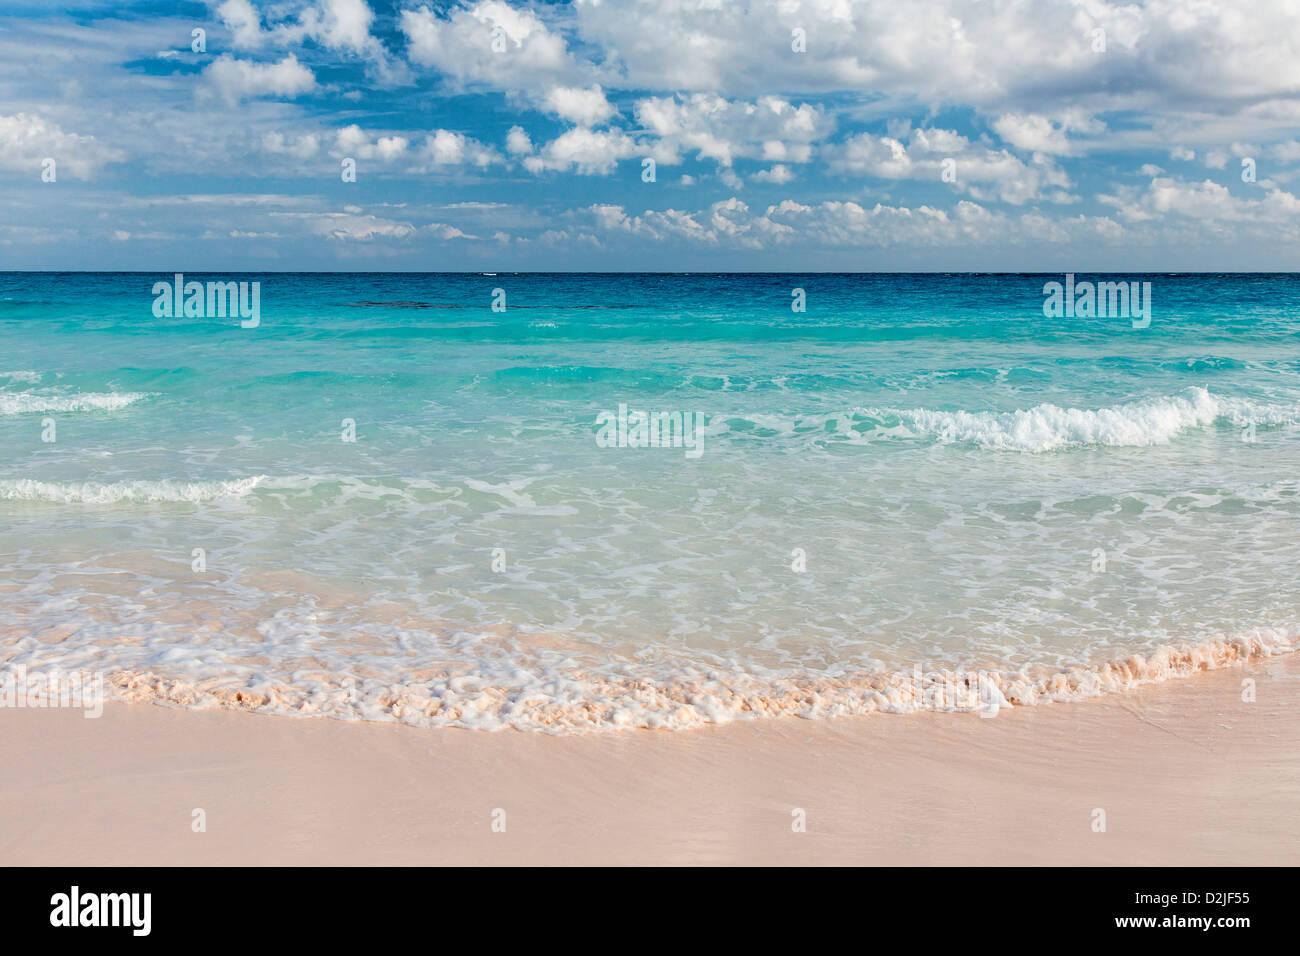 L'Île Eleuthera, Bahamas, Club Med Beach Banque D'Images